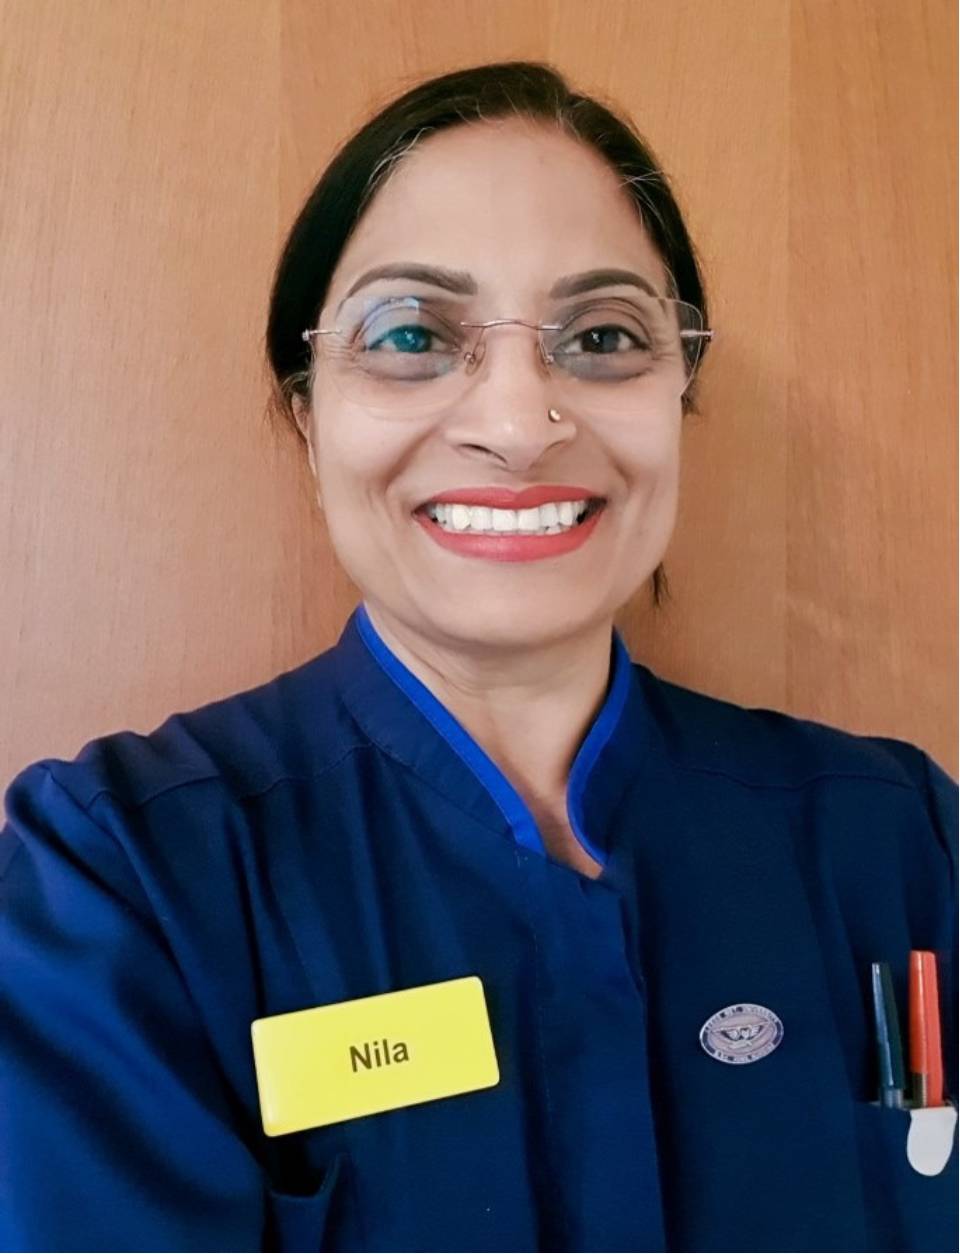 Nurse Nila Chauhan